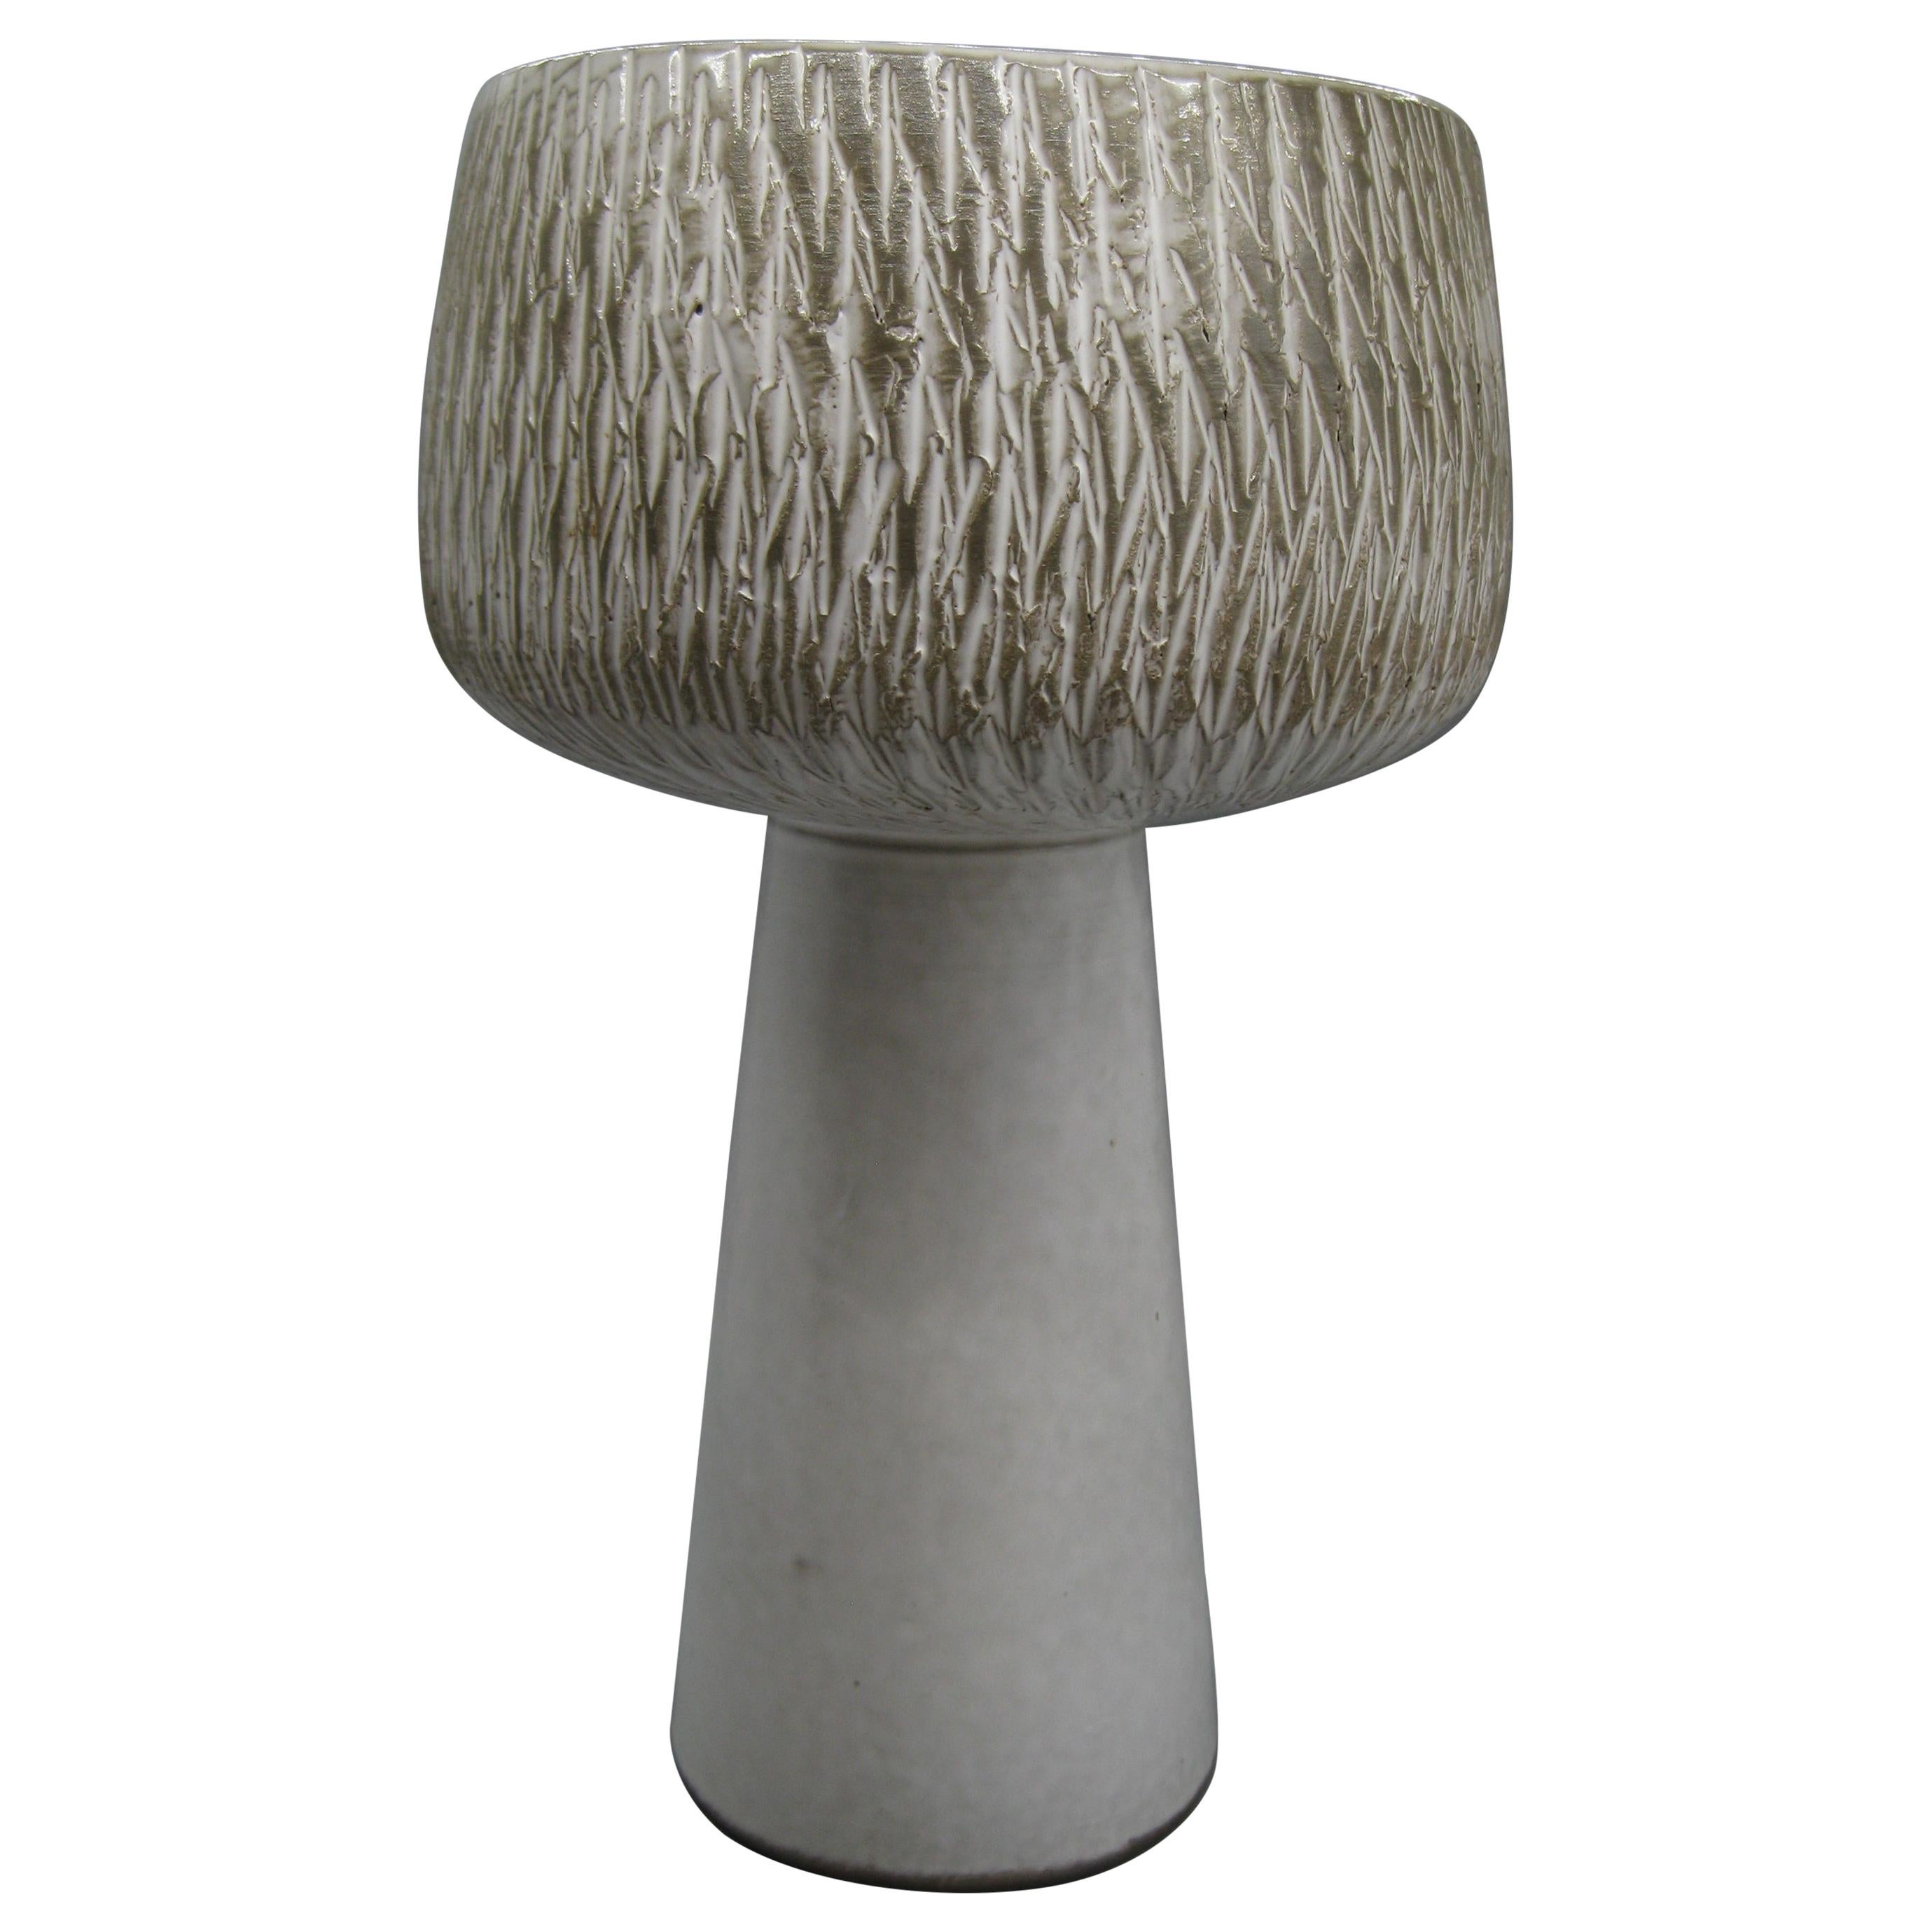 1960s Japanese Modernist Ikebana Ceramic Pottery Sgraffito Pedestal Vase Vessel